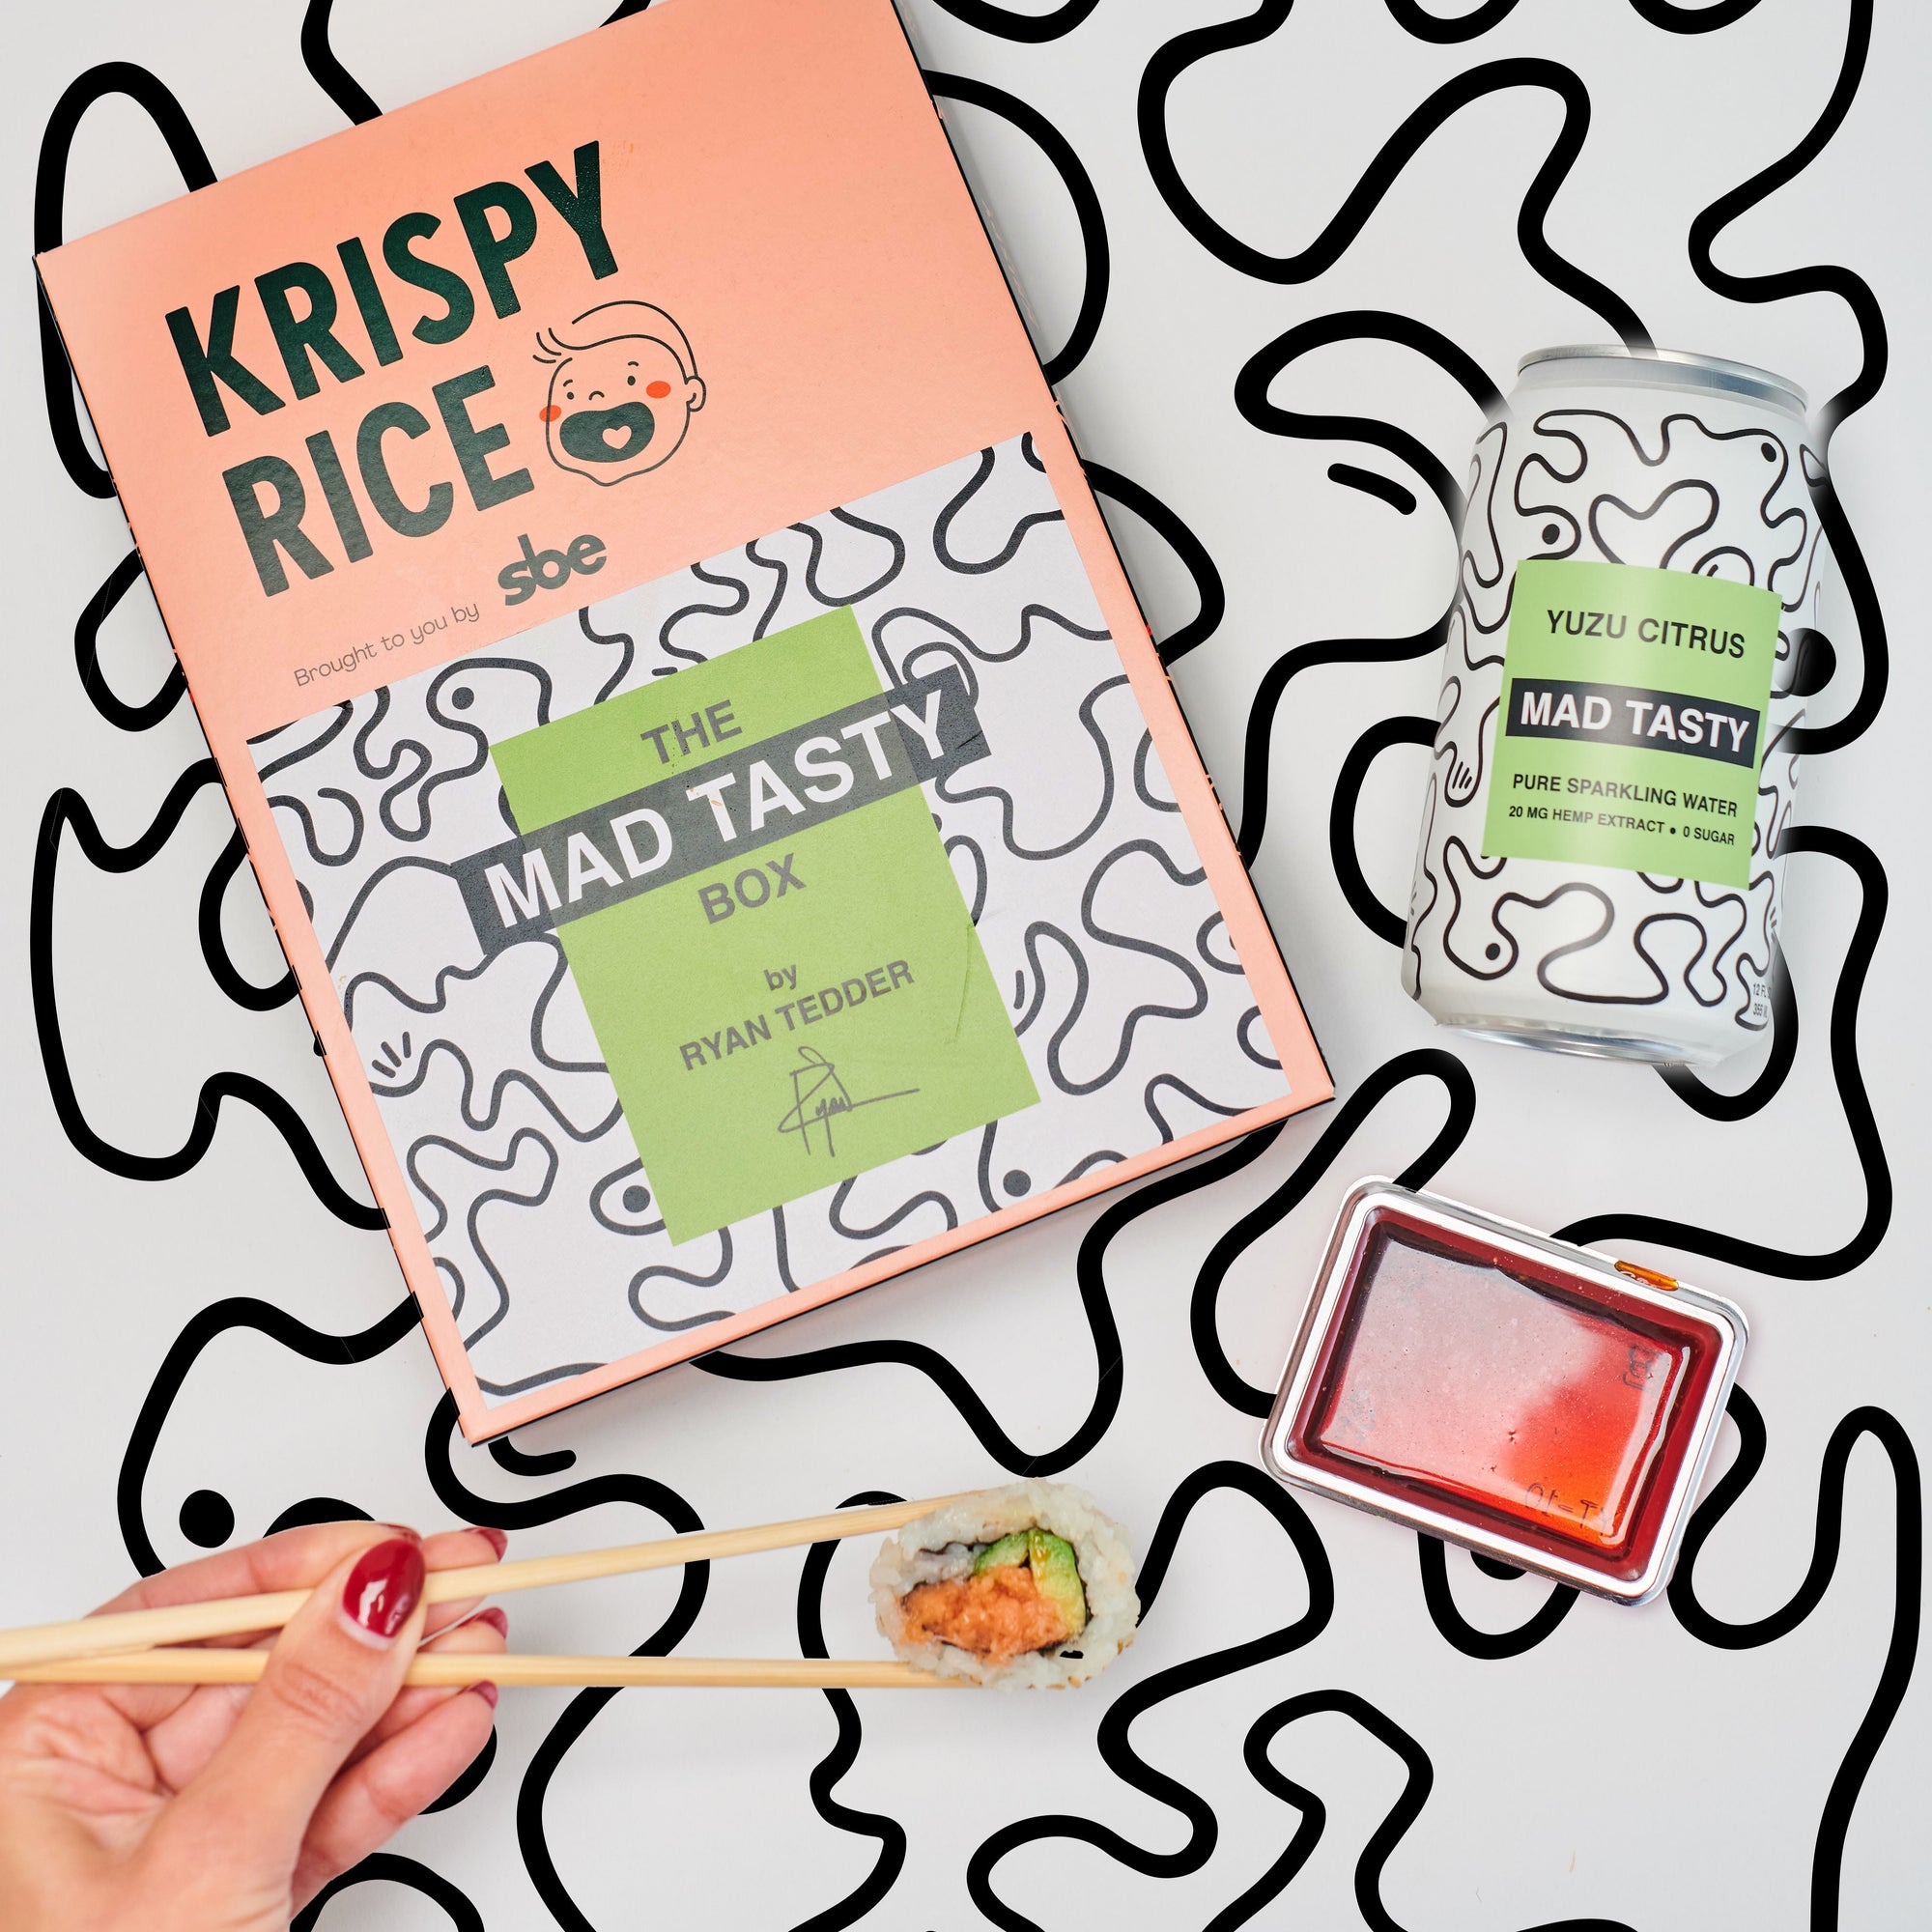 Celeb Collab: The MAD TASTY x Krispy Rice Box